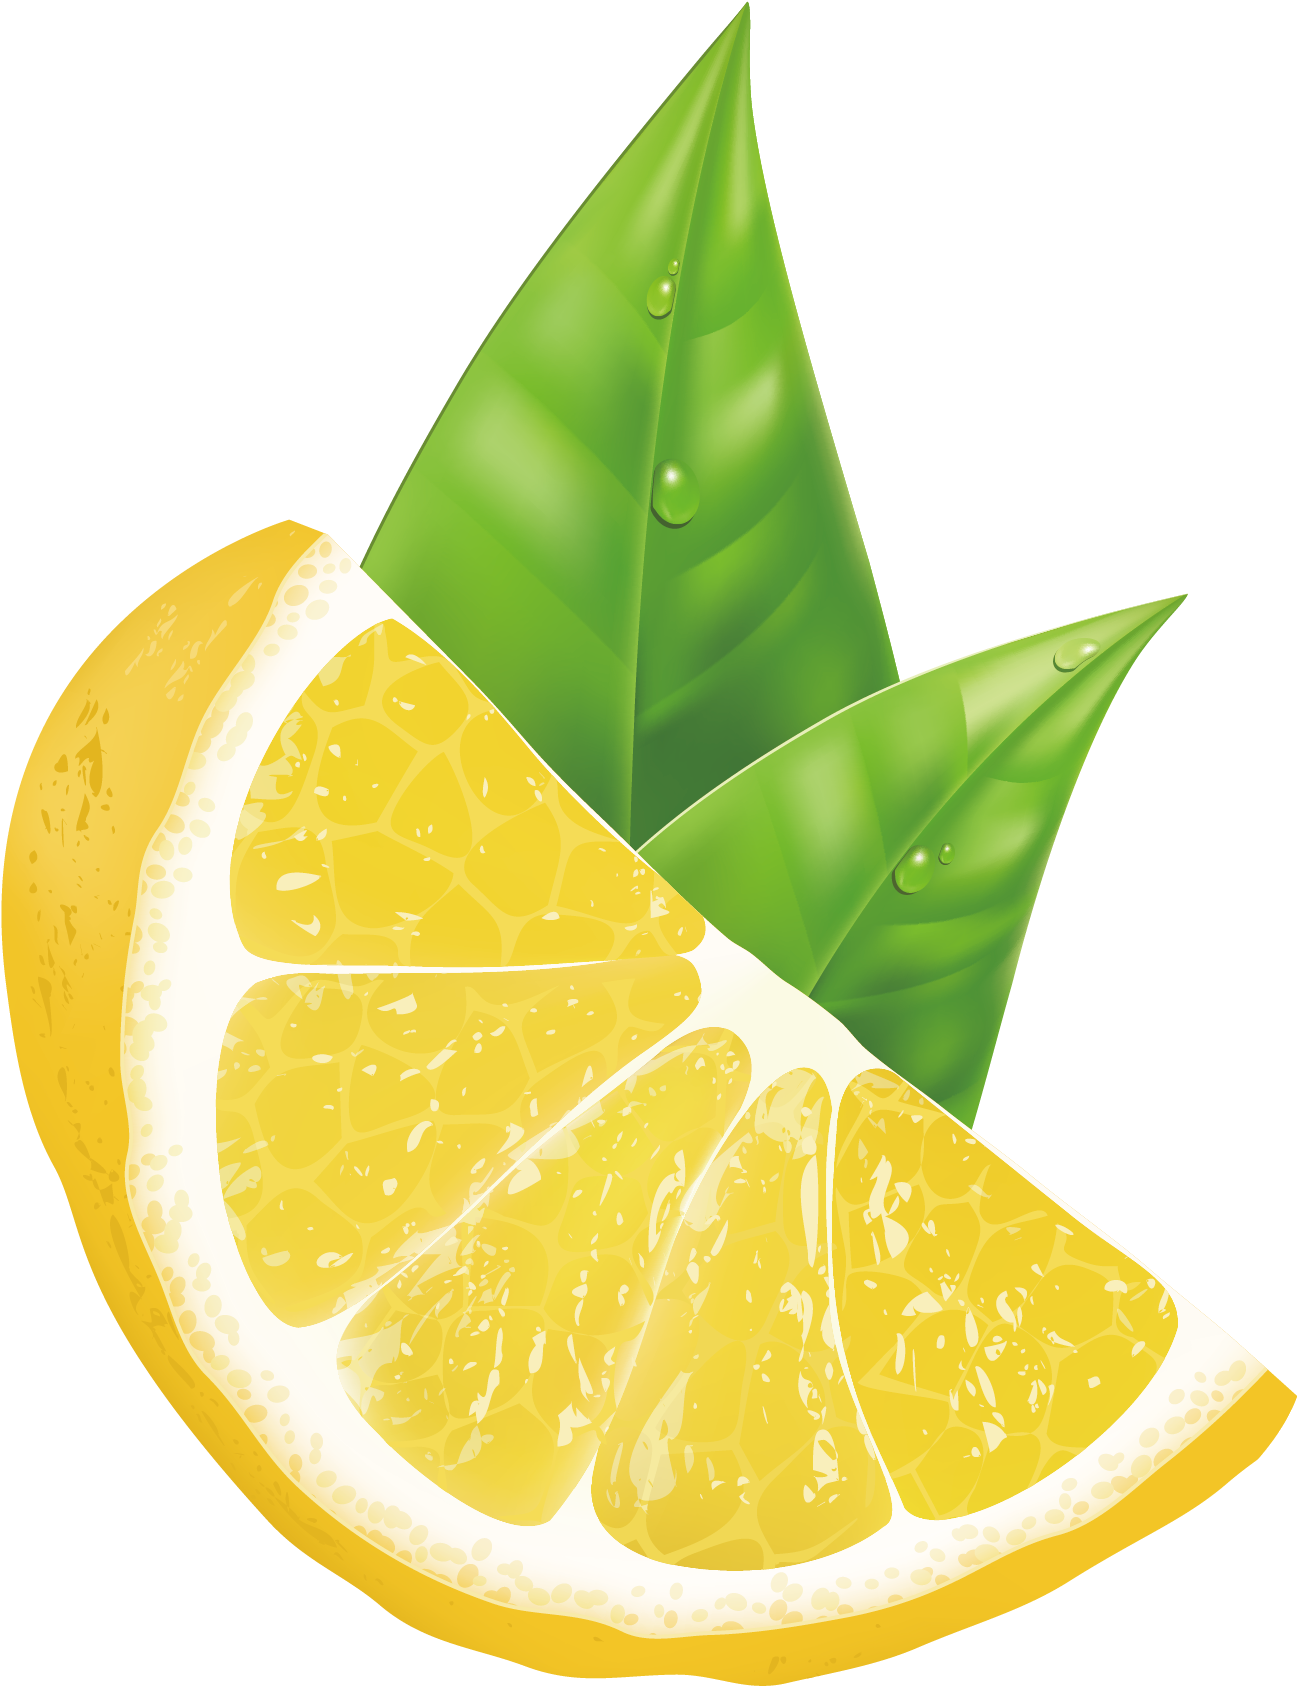 Lemon Lime Drink Lemon Lime Drink Citric Acid - Sweet Lemon (1525x1700)